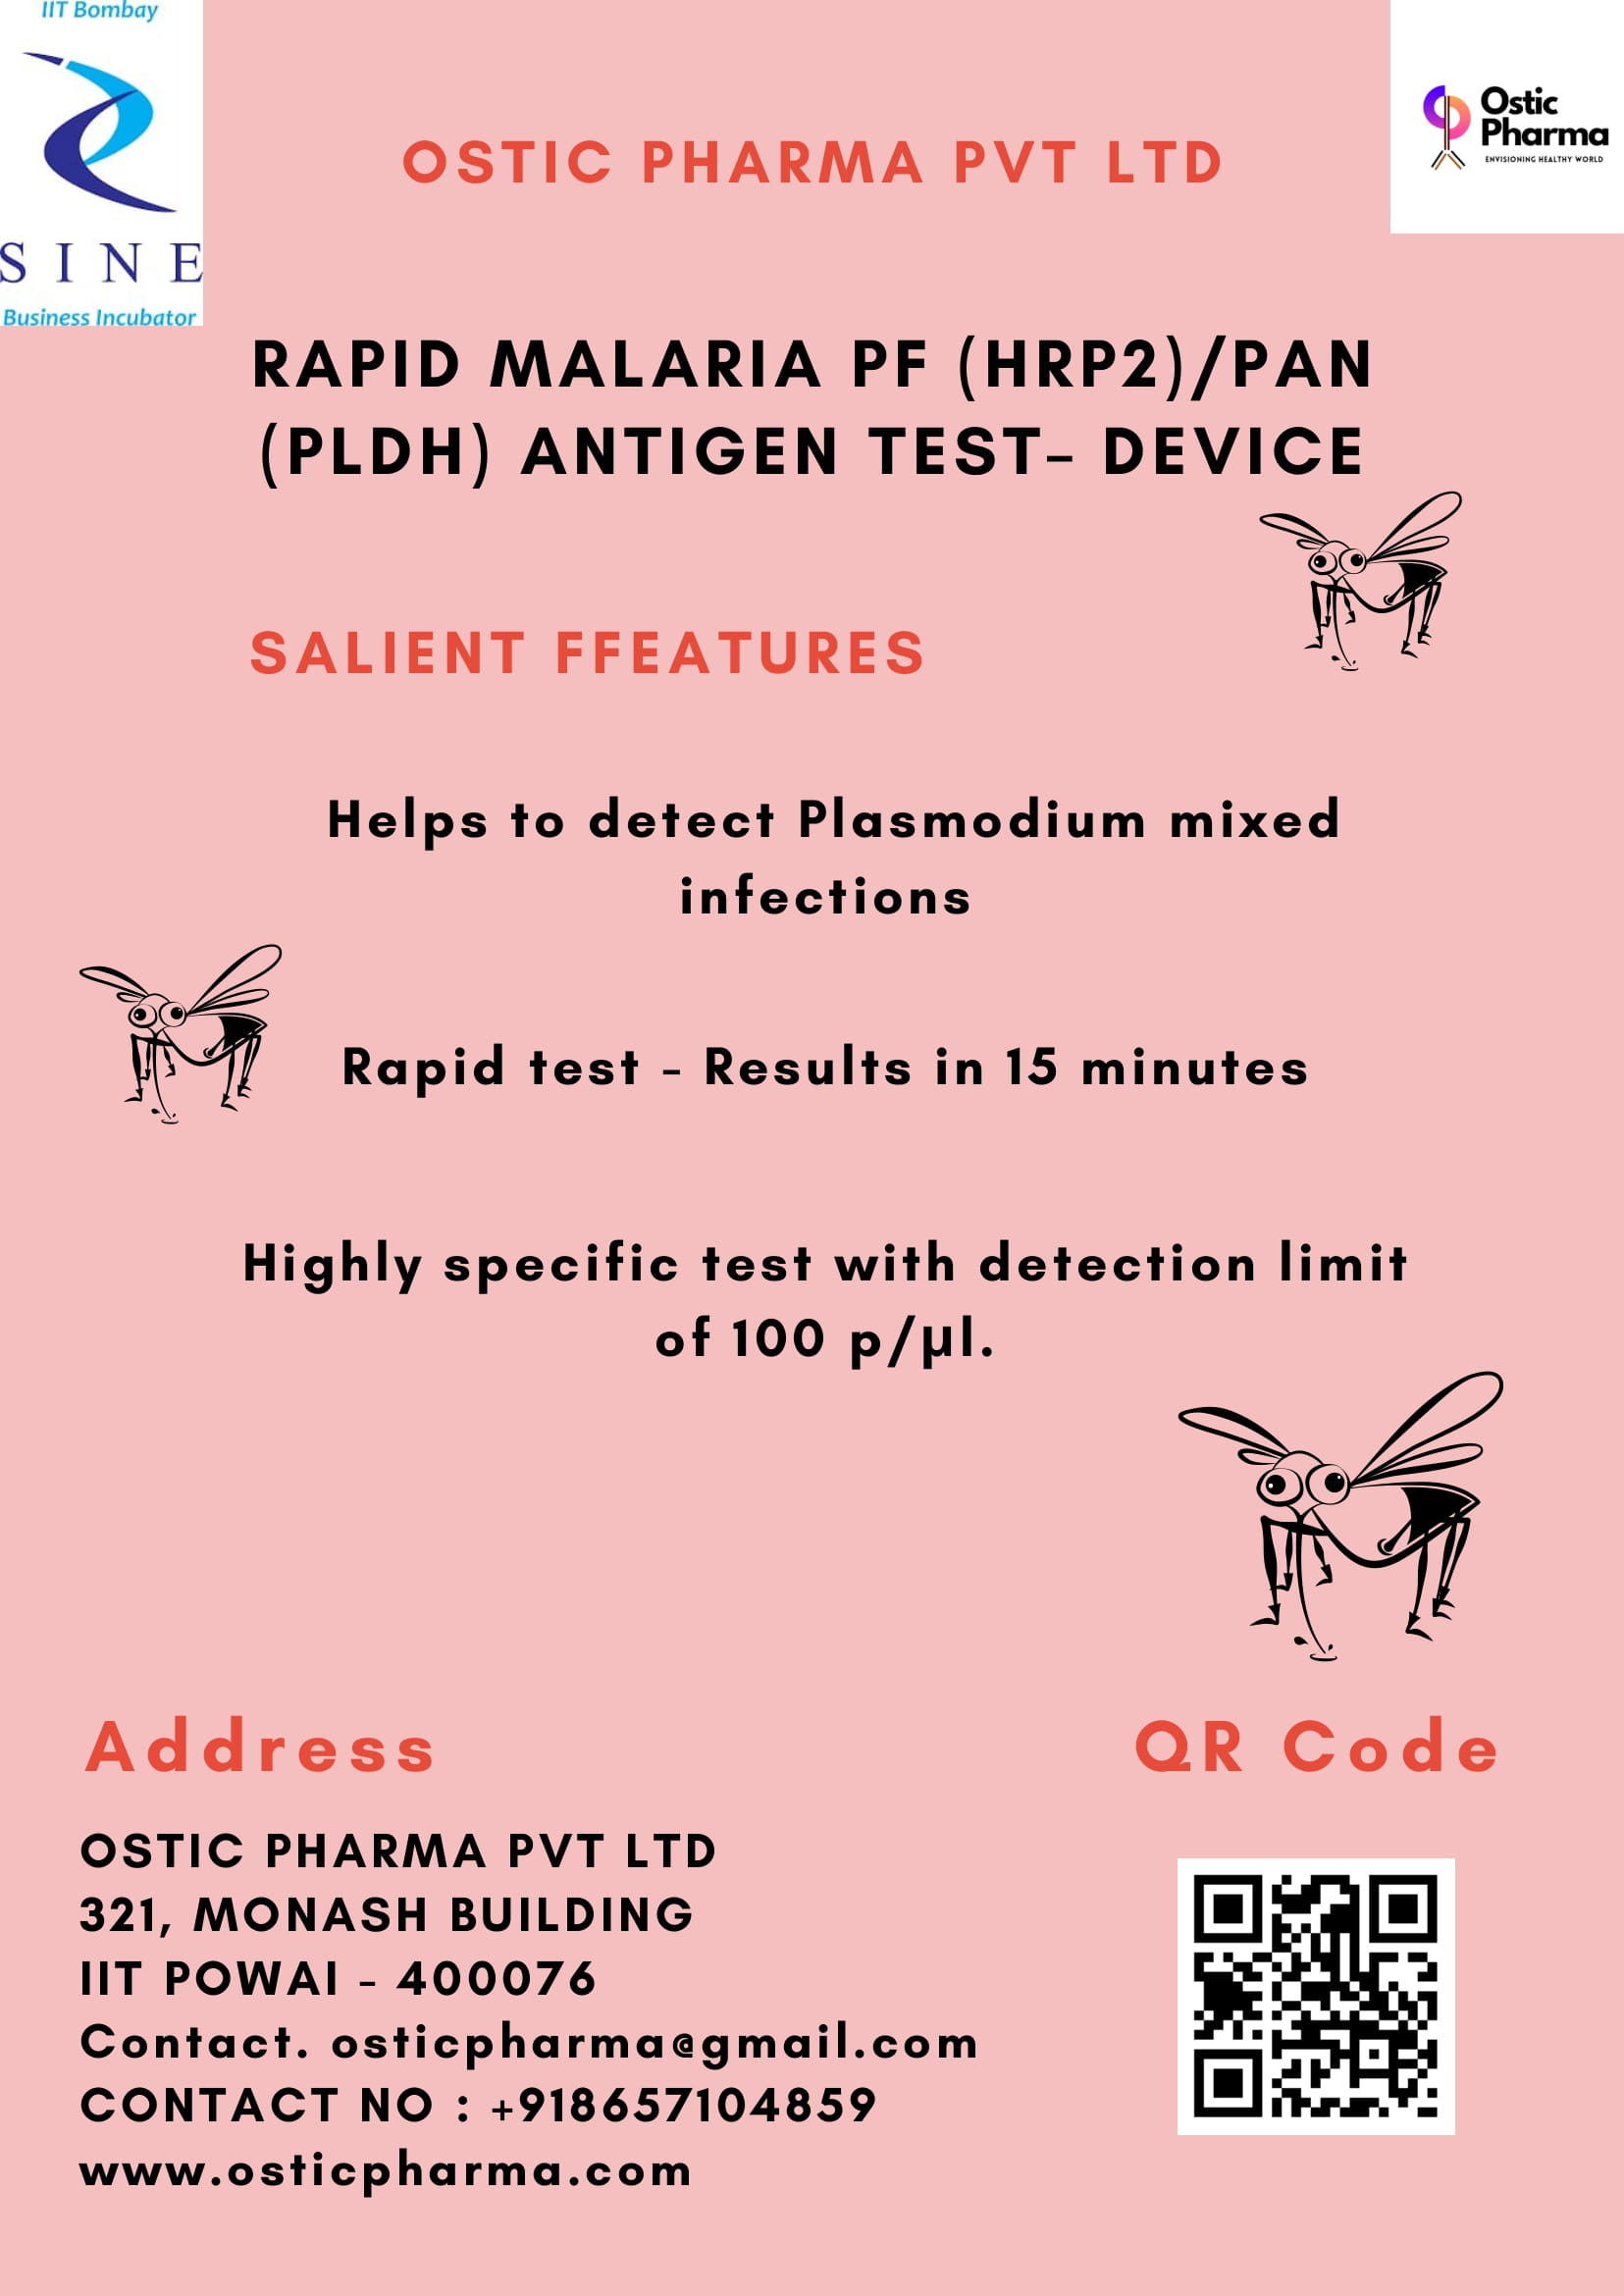 RAPID MALARIA OF OR PAN ANTIGEN TEST DEVICE